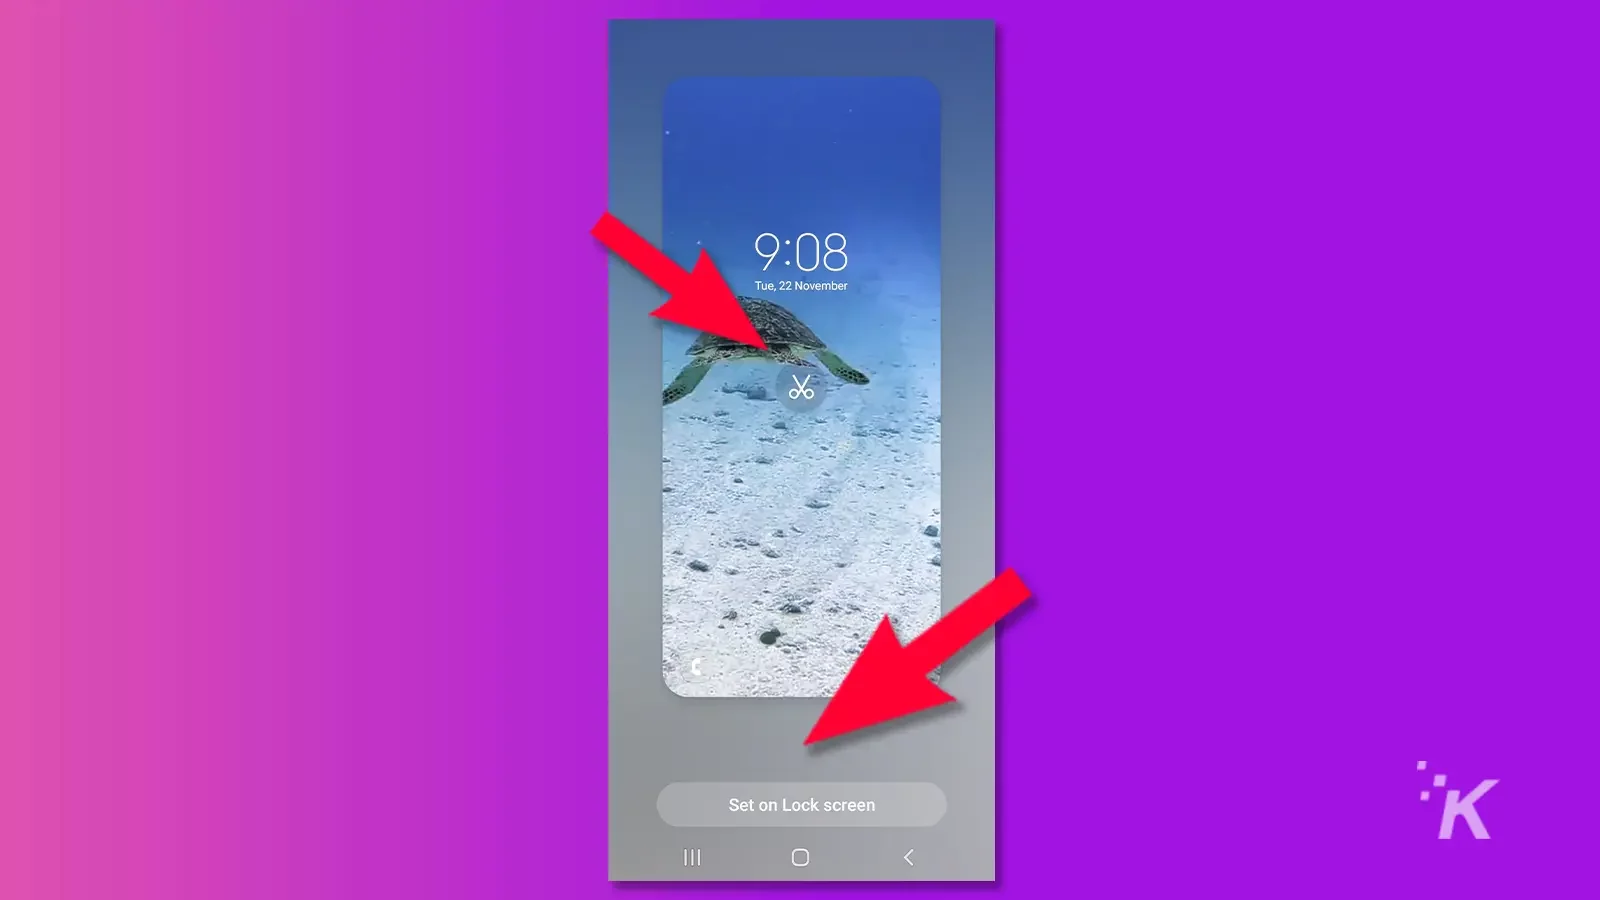 Samsung screen on lock screen wallpaper on a purple background